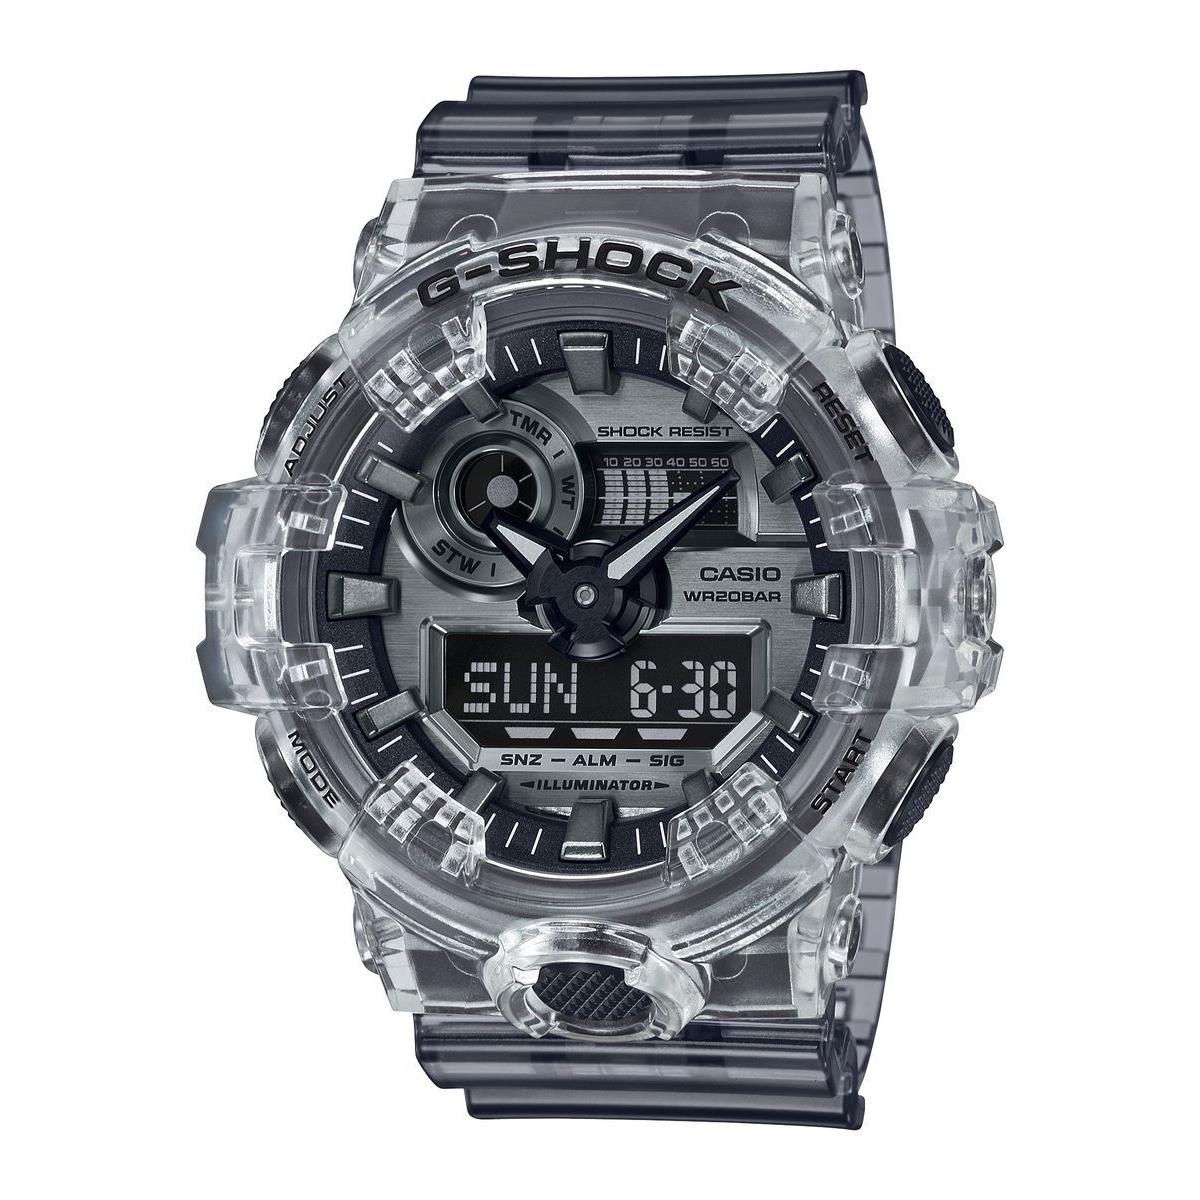 Casio G-shock GA700 Watch